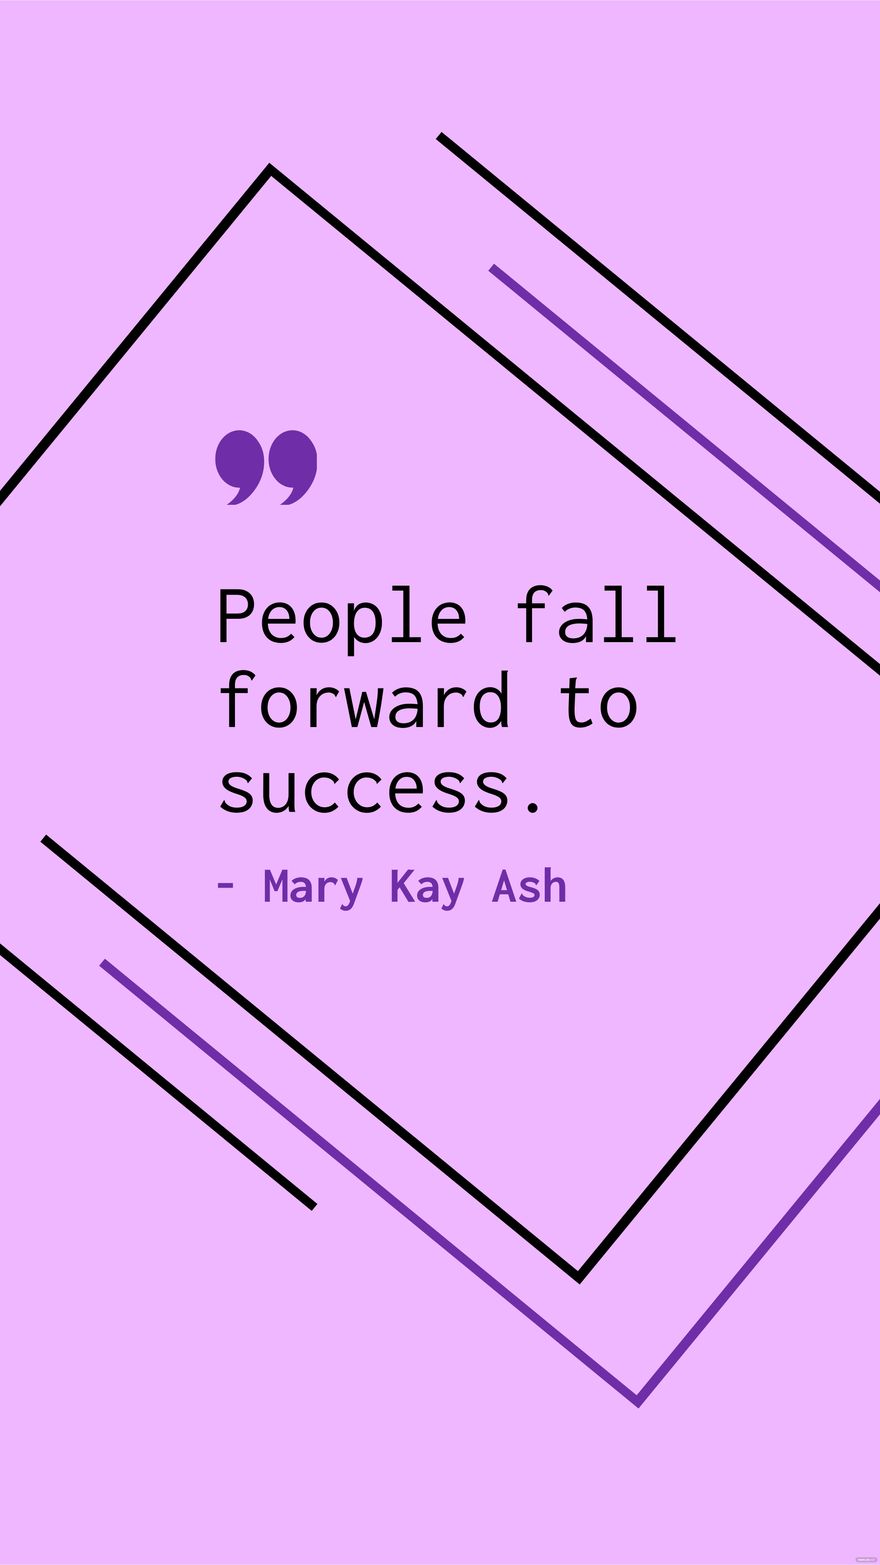 Free Mary Kay Ash - People fall forward to success.